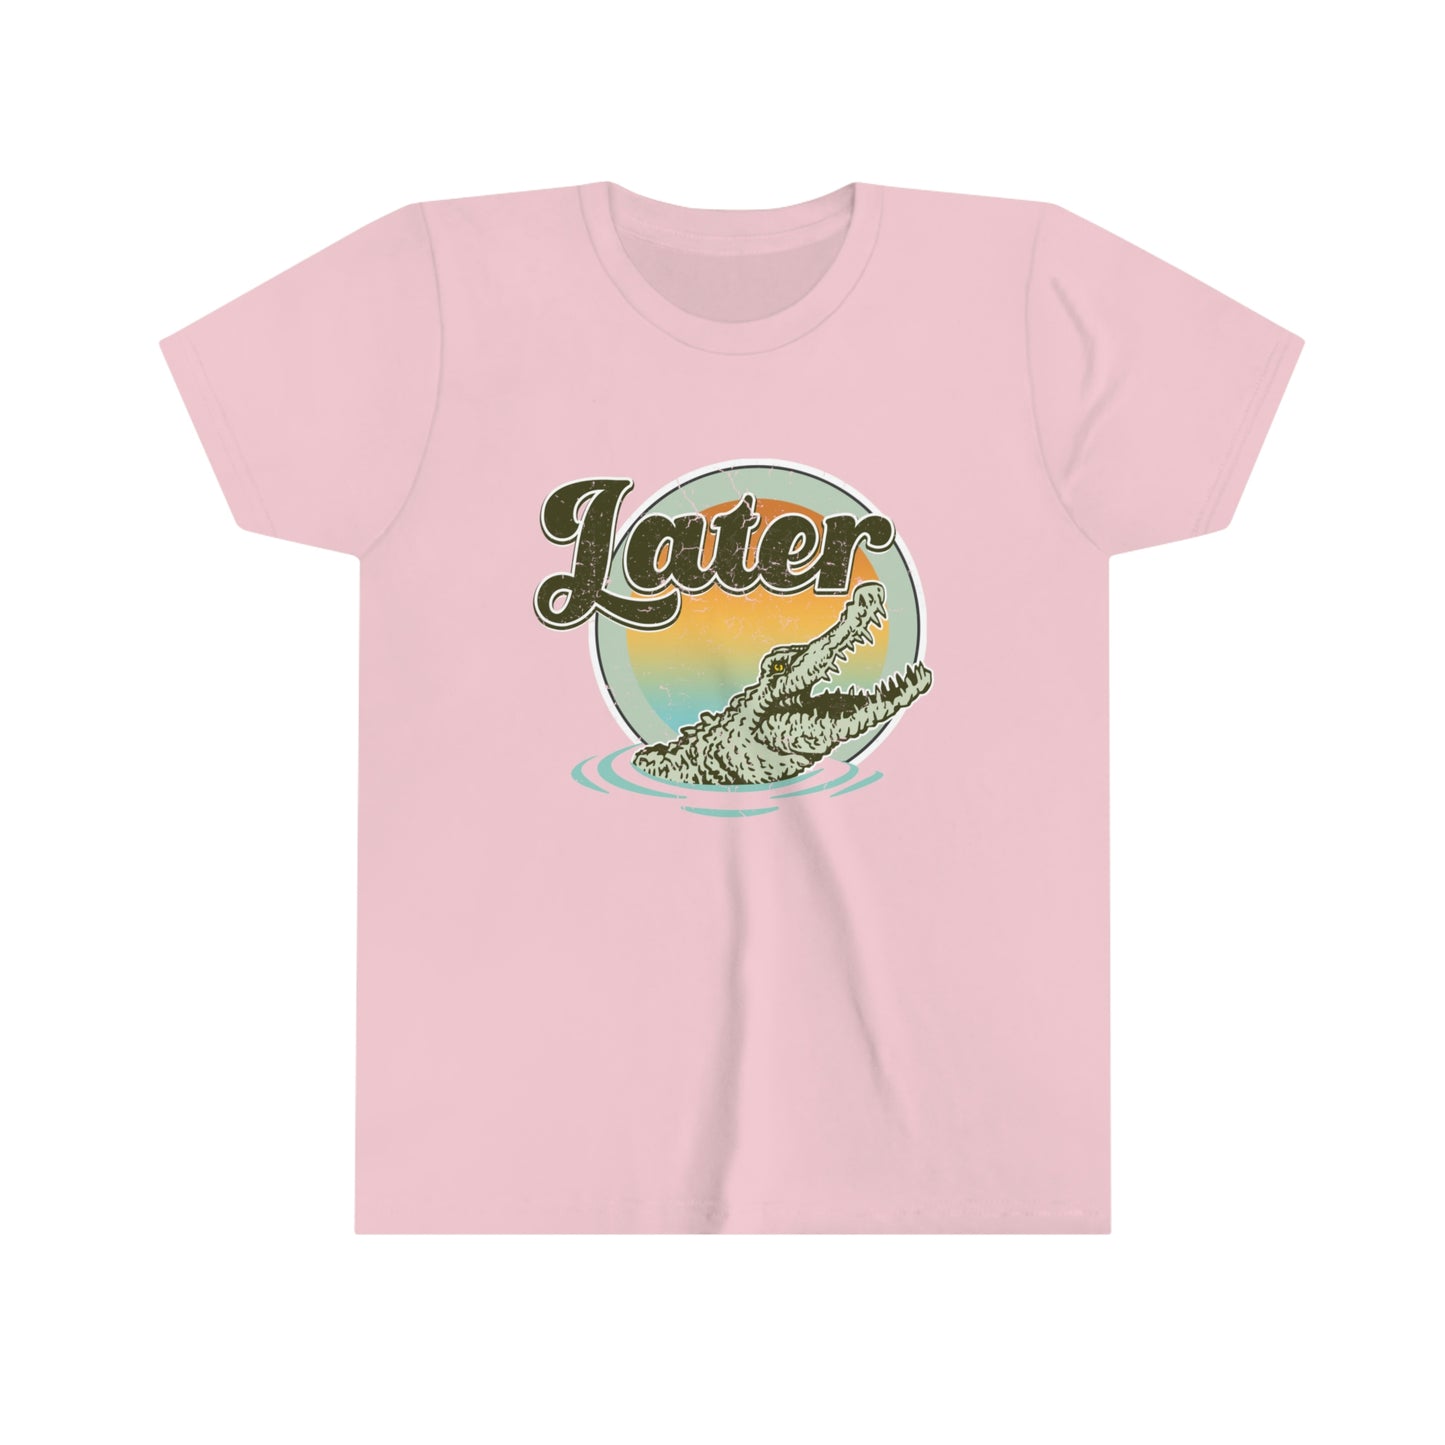 "Later Gator" Youth Short Sleeve Tee